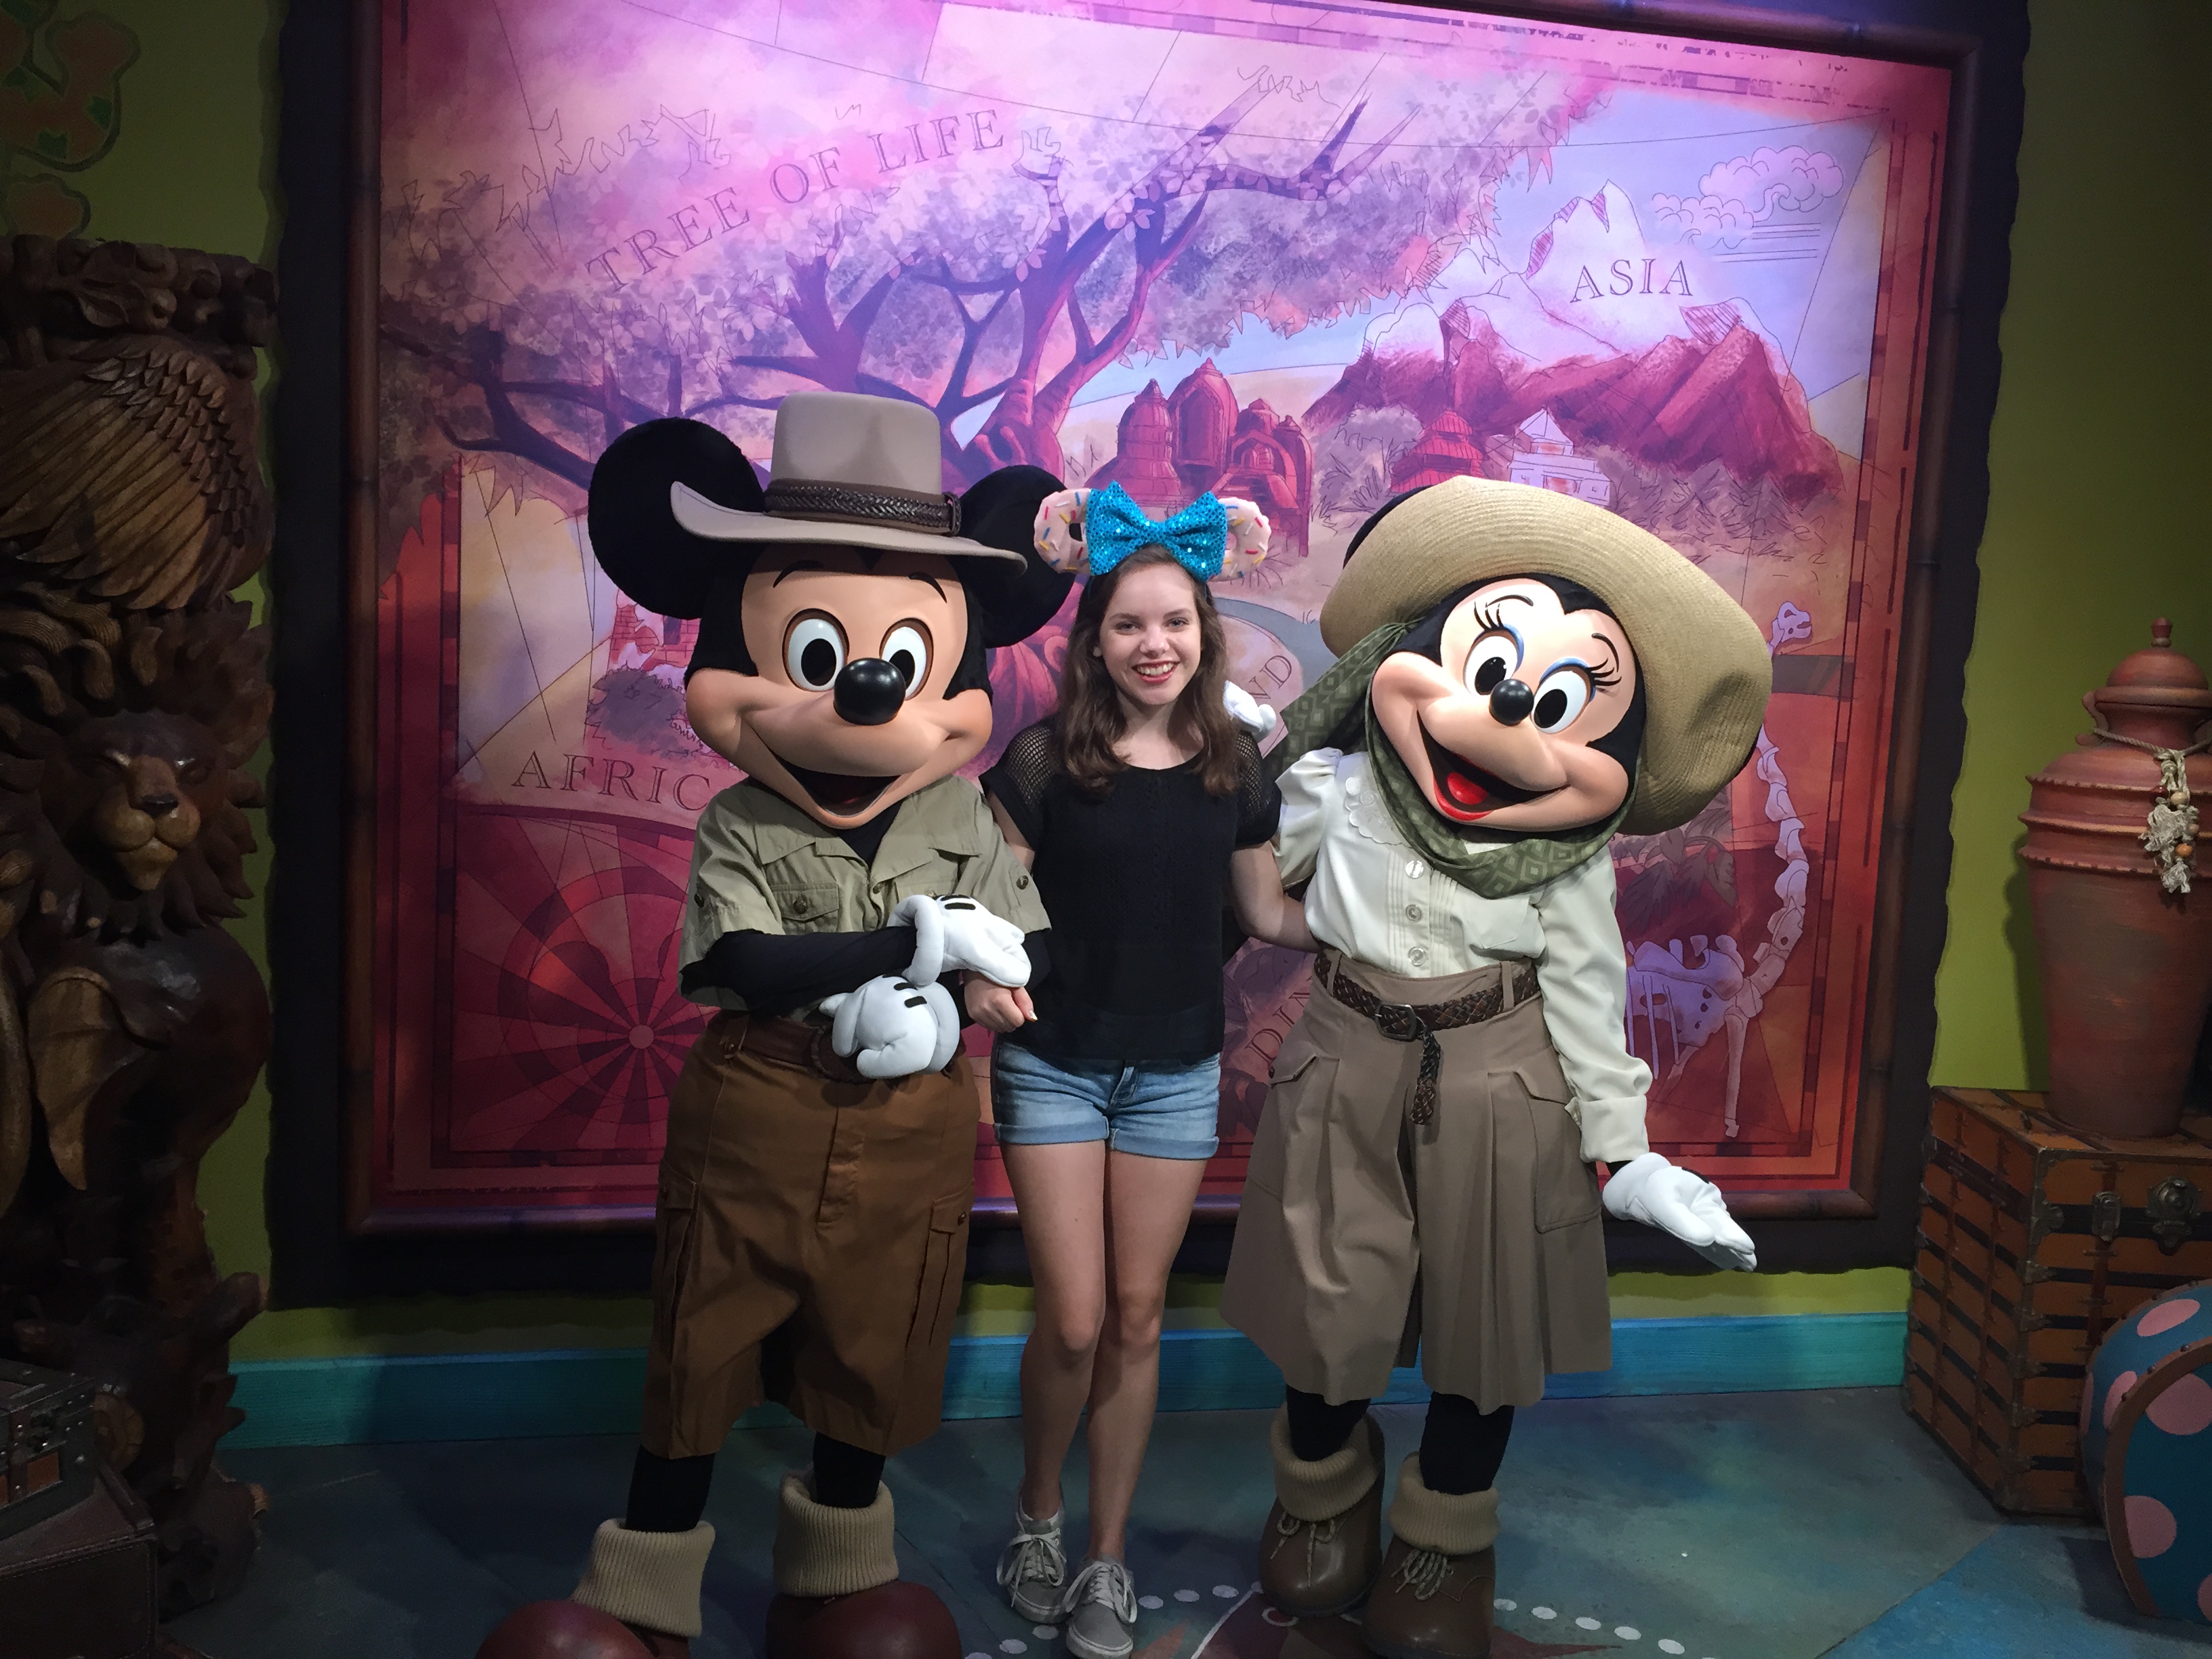 Meeting Minnie and Mickey at Disney World